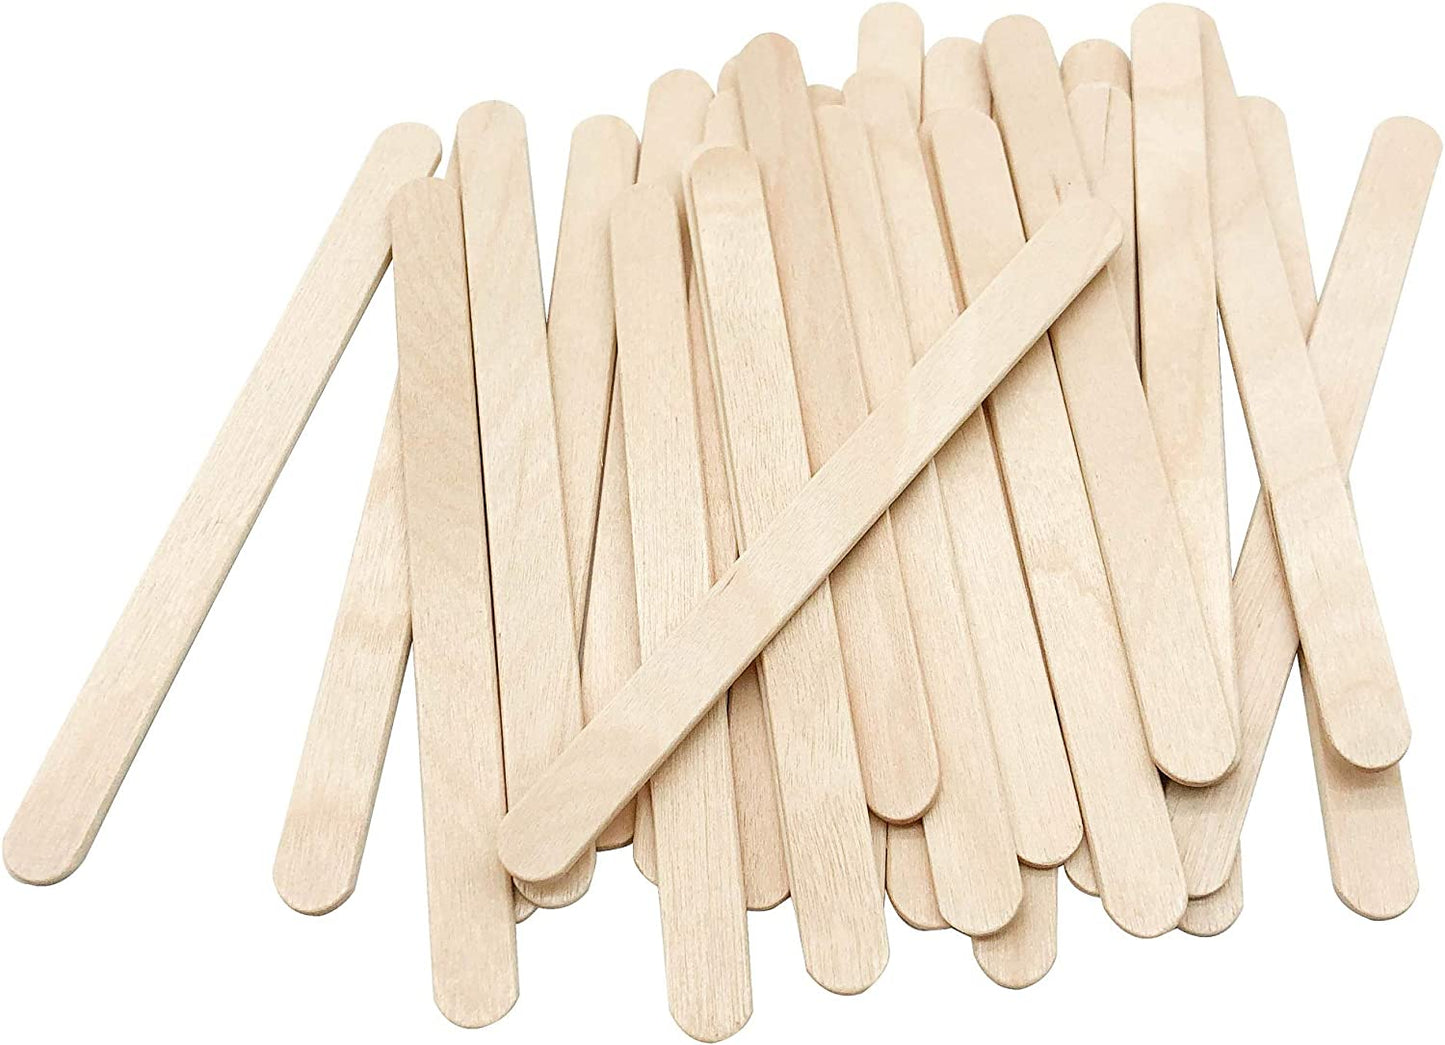 200 Pcs Craft Sticks Ice Cream Sticks Natural Wood Popsicle Craft Sticks 4.5 Inch Length Treat Sticks Ice Pop Sticks for DIY Crafts